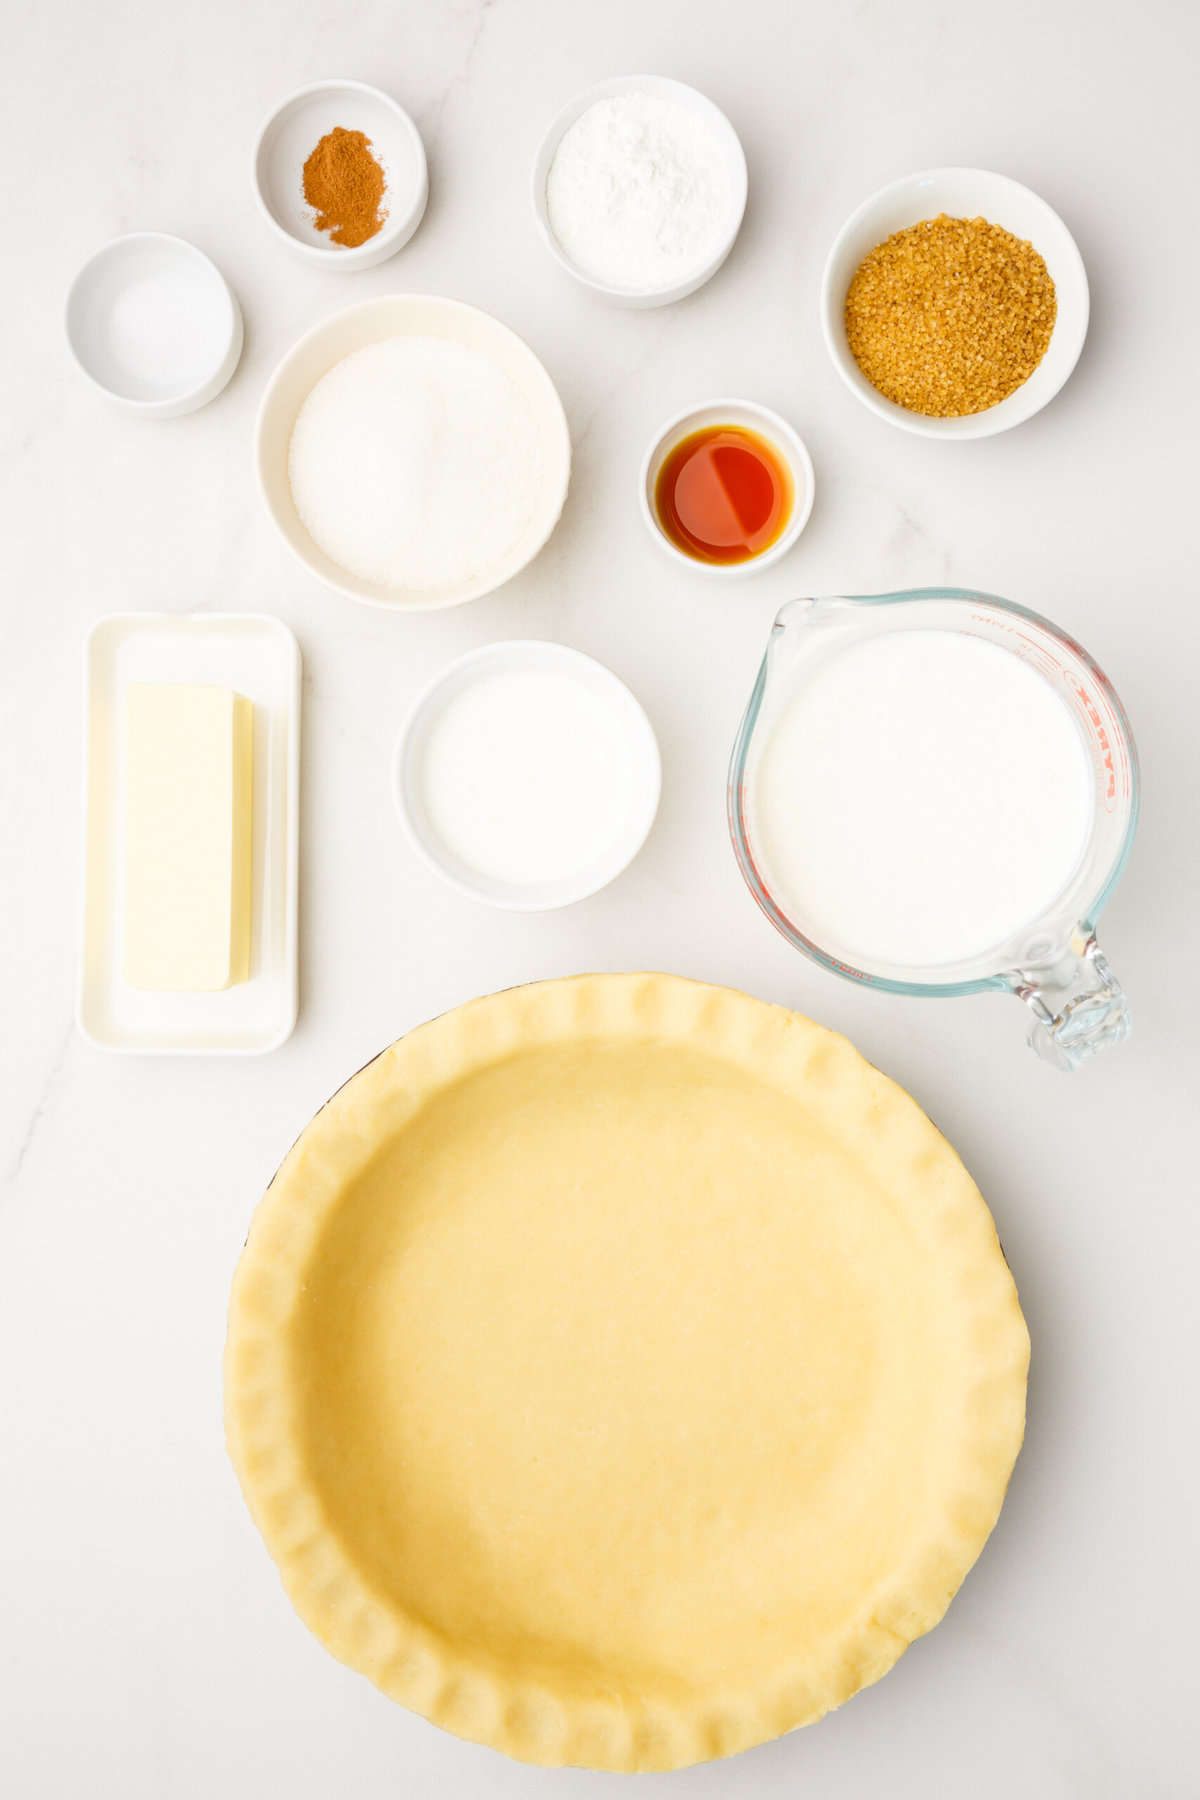 Ingredients to make amish sugar cream pie.